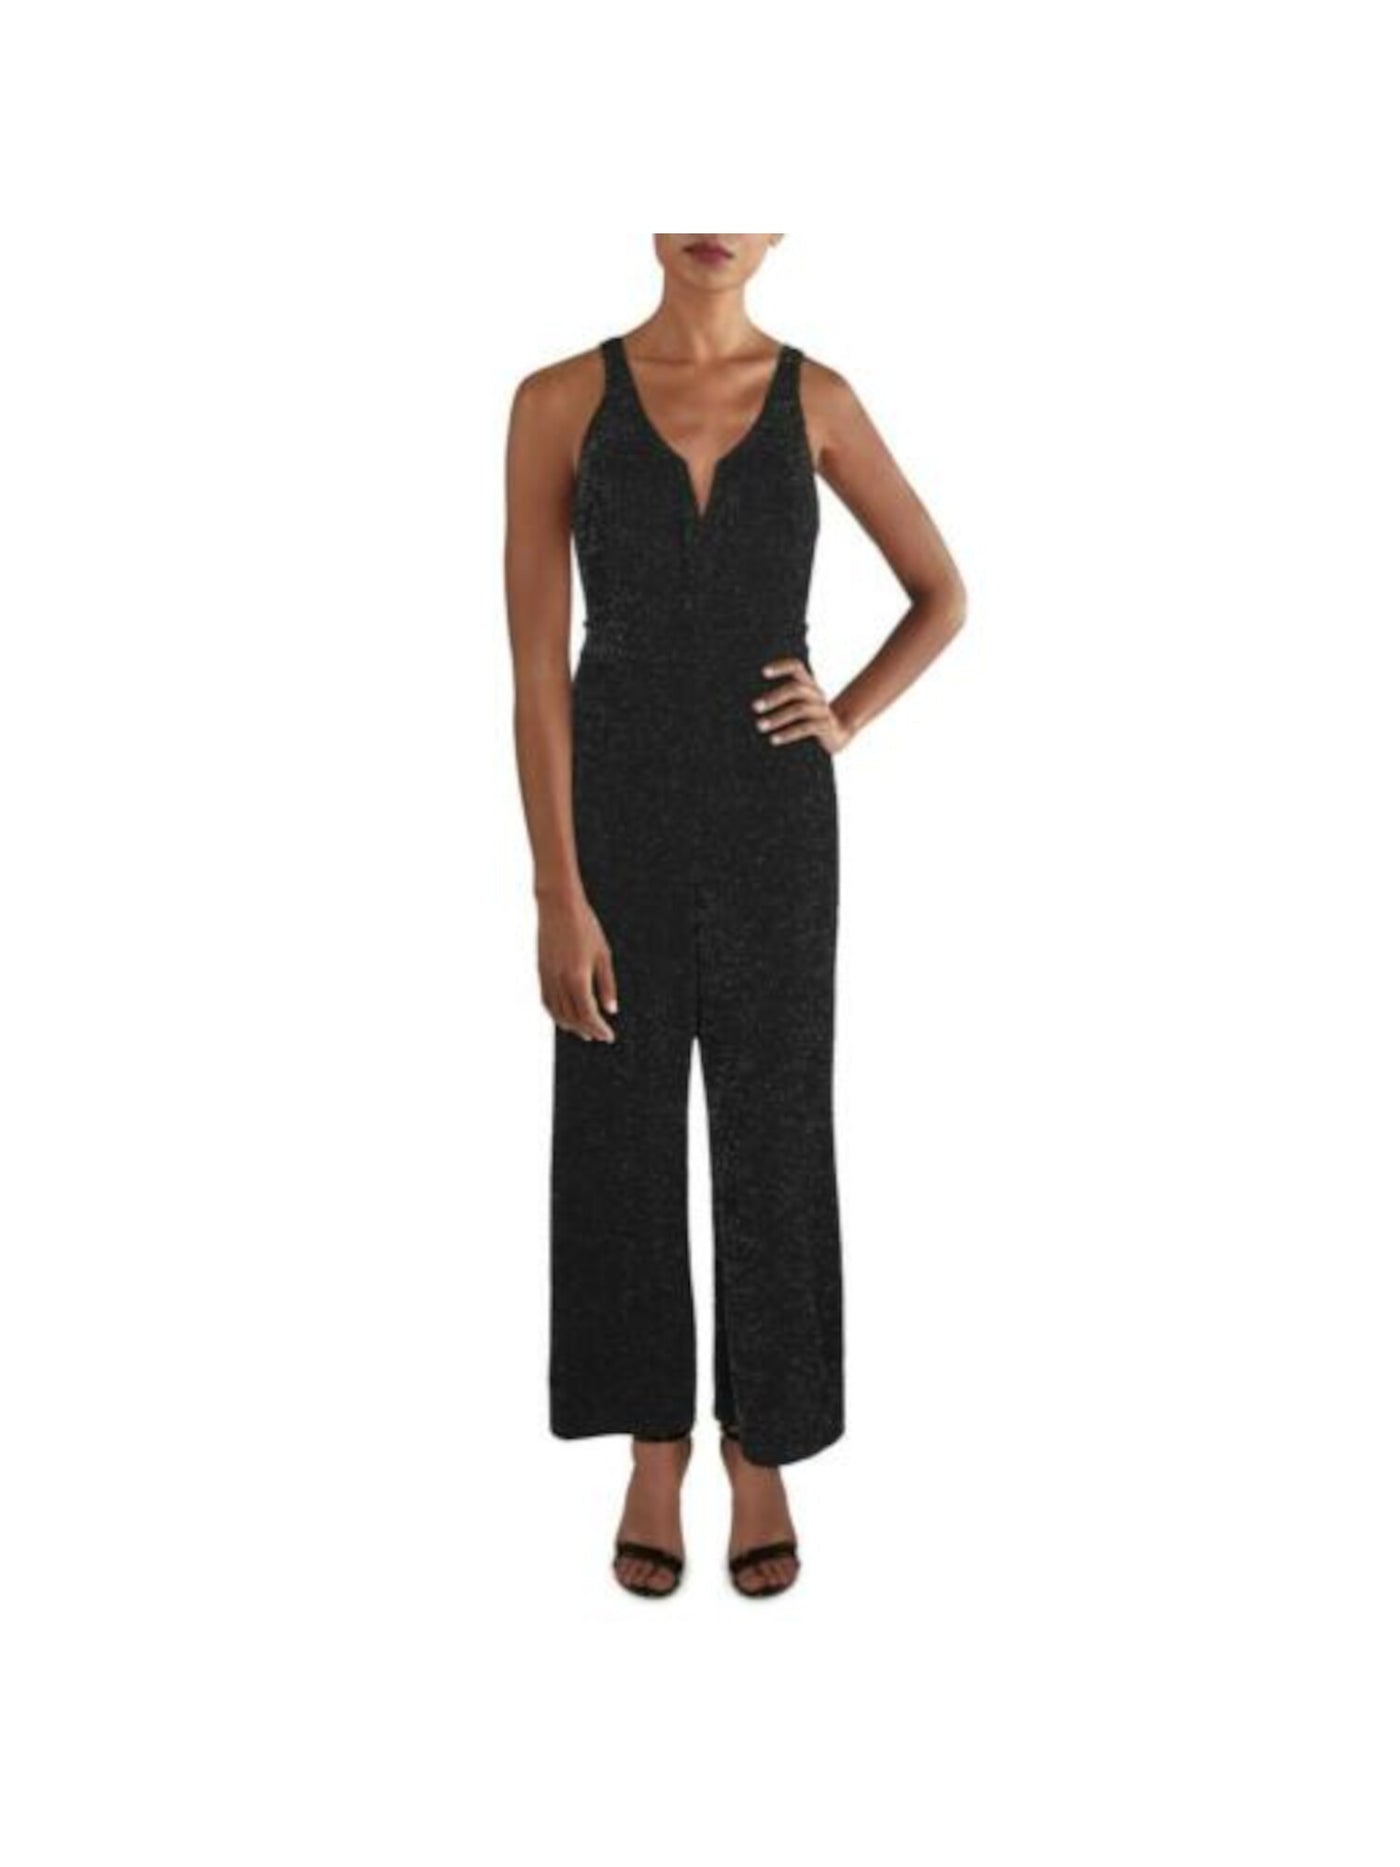 LISA + LUCY Womens Black Sleeveless Straight leg Evening Jumpsuit Size: XS